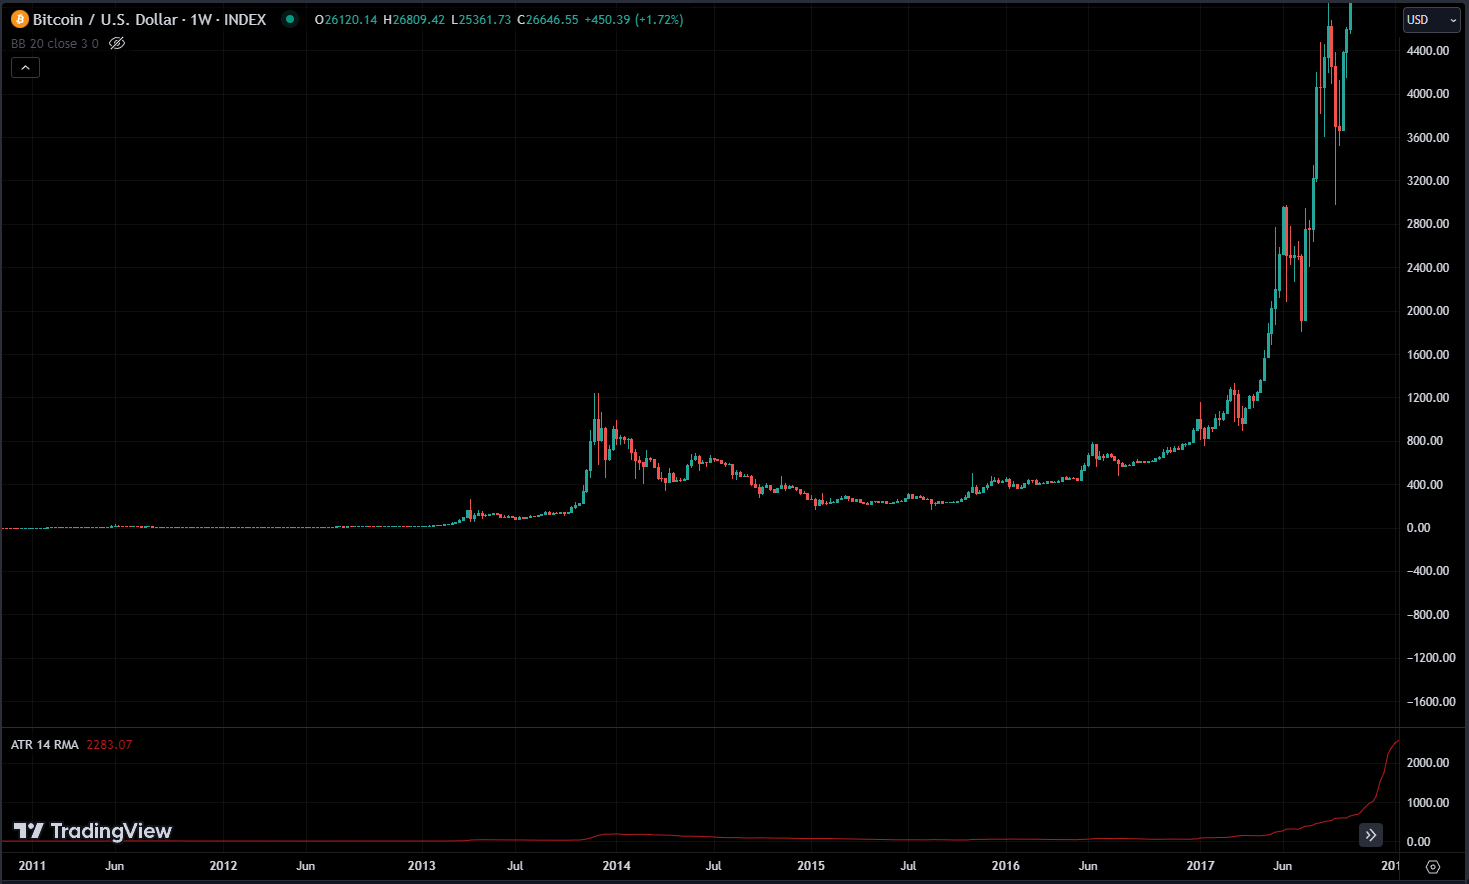 bitcoin price chart
xlearnonline.com